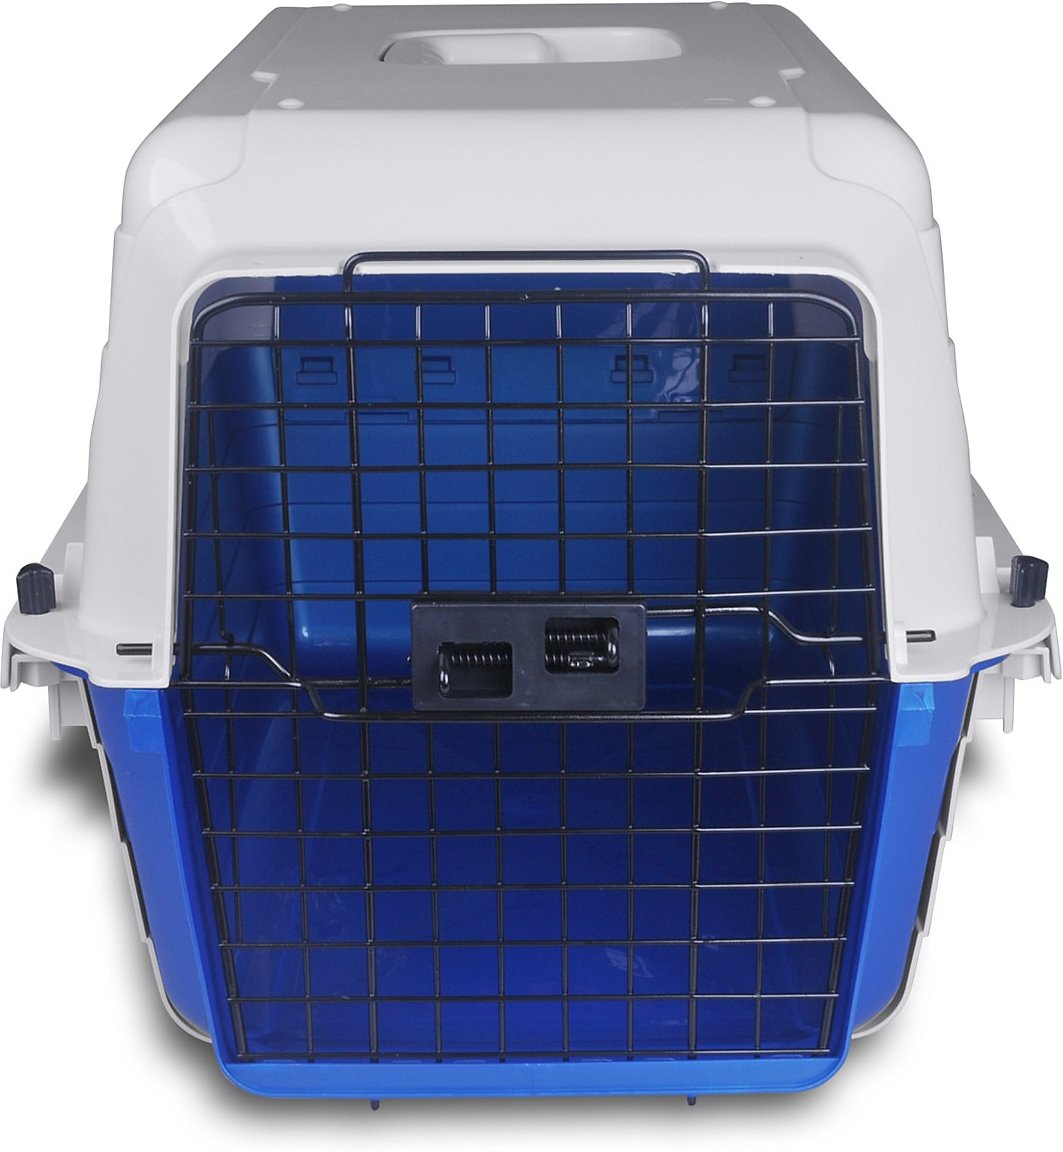 Canine's World Carrier Calm Carrier E-Z Load Sliding Drawer Cat Kennel Van Ness